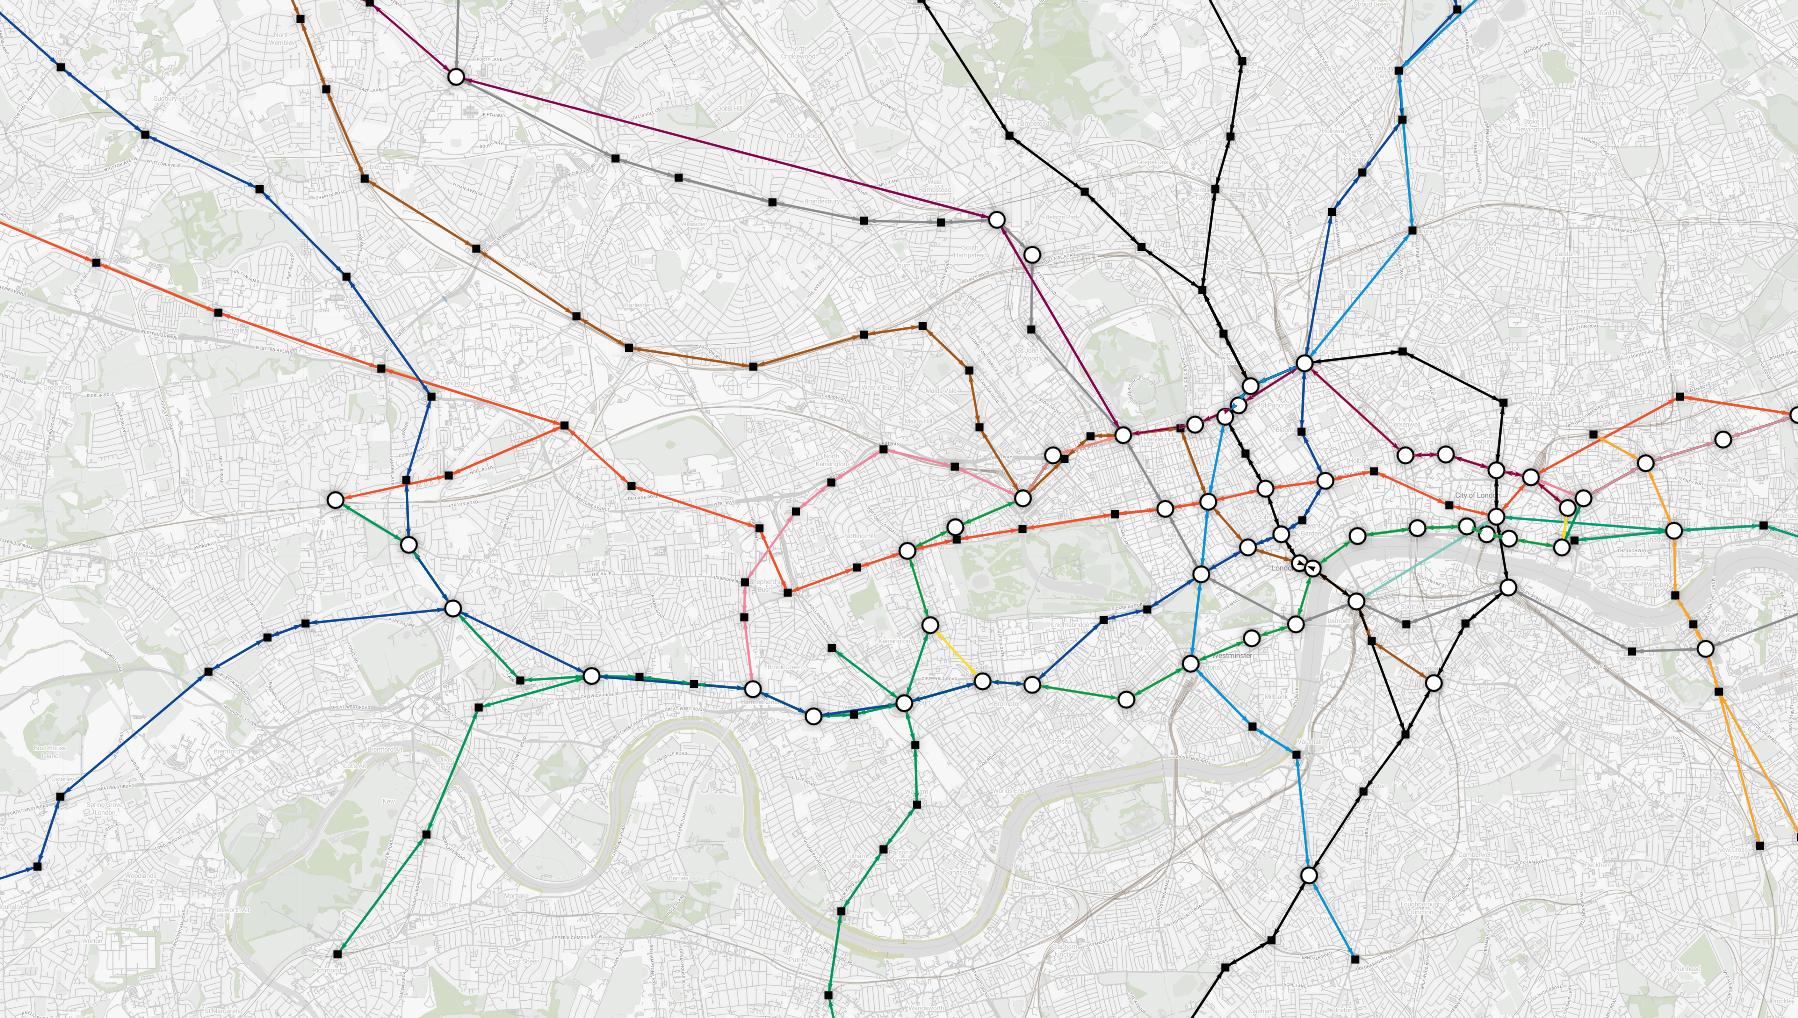 London underground memgraph lab data visualization custom style